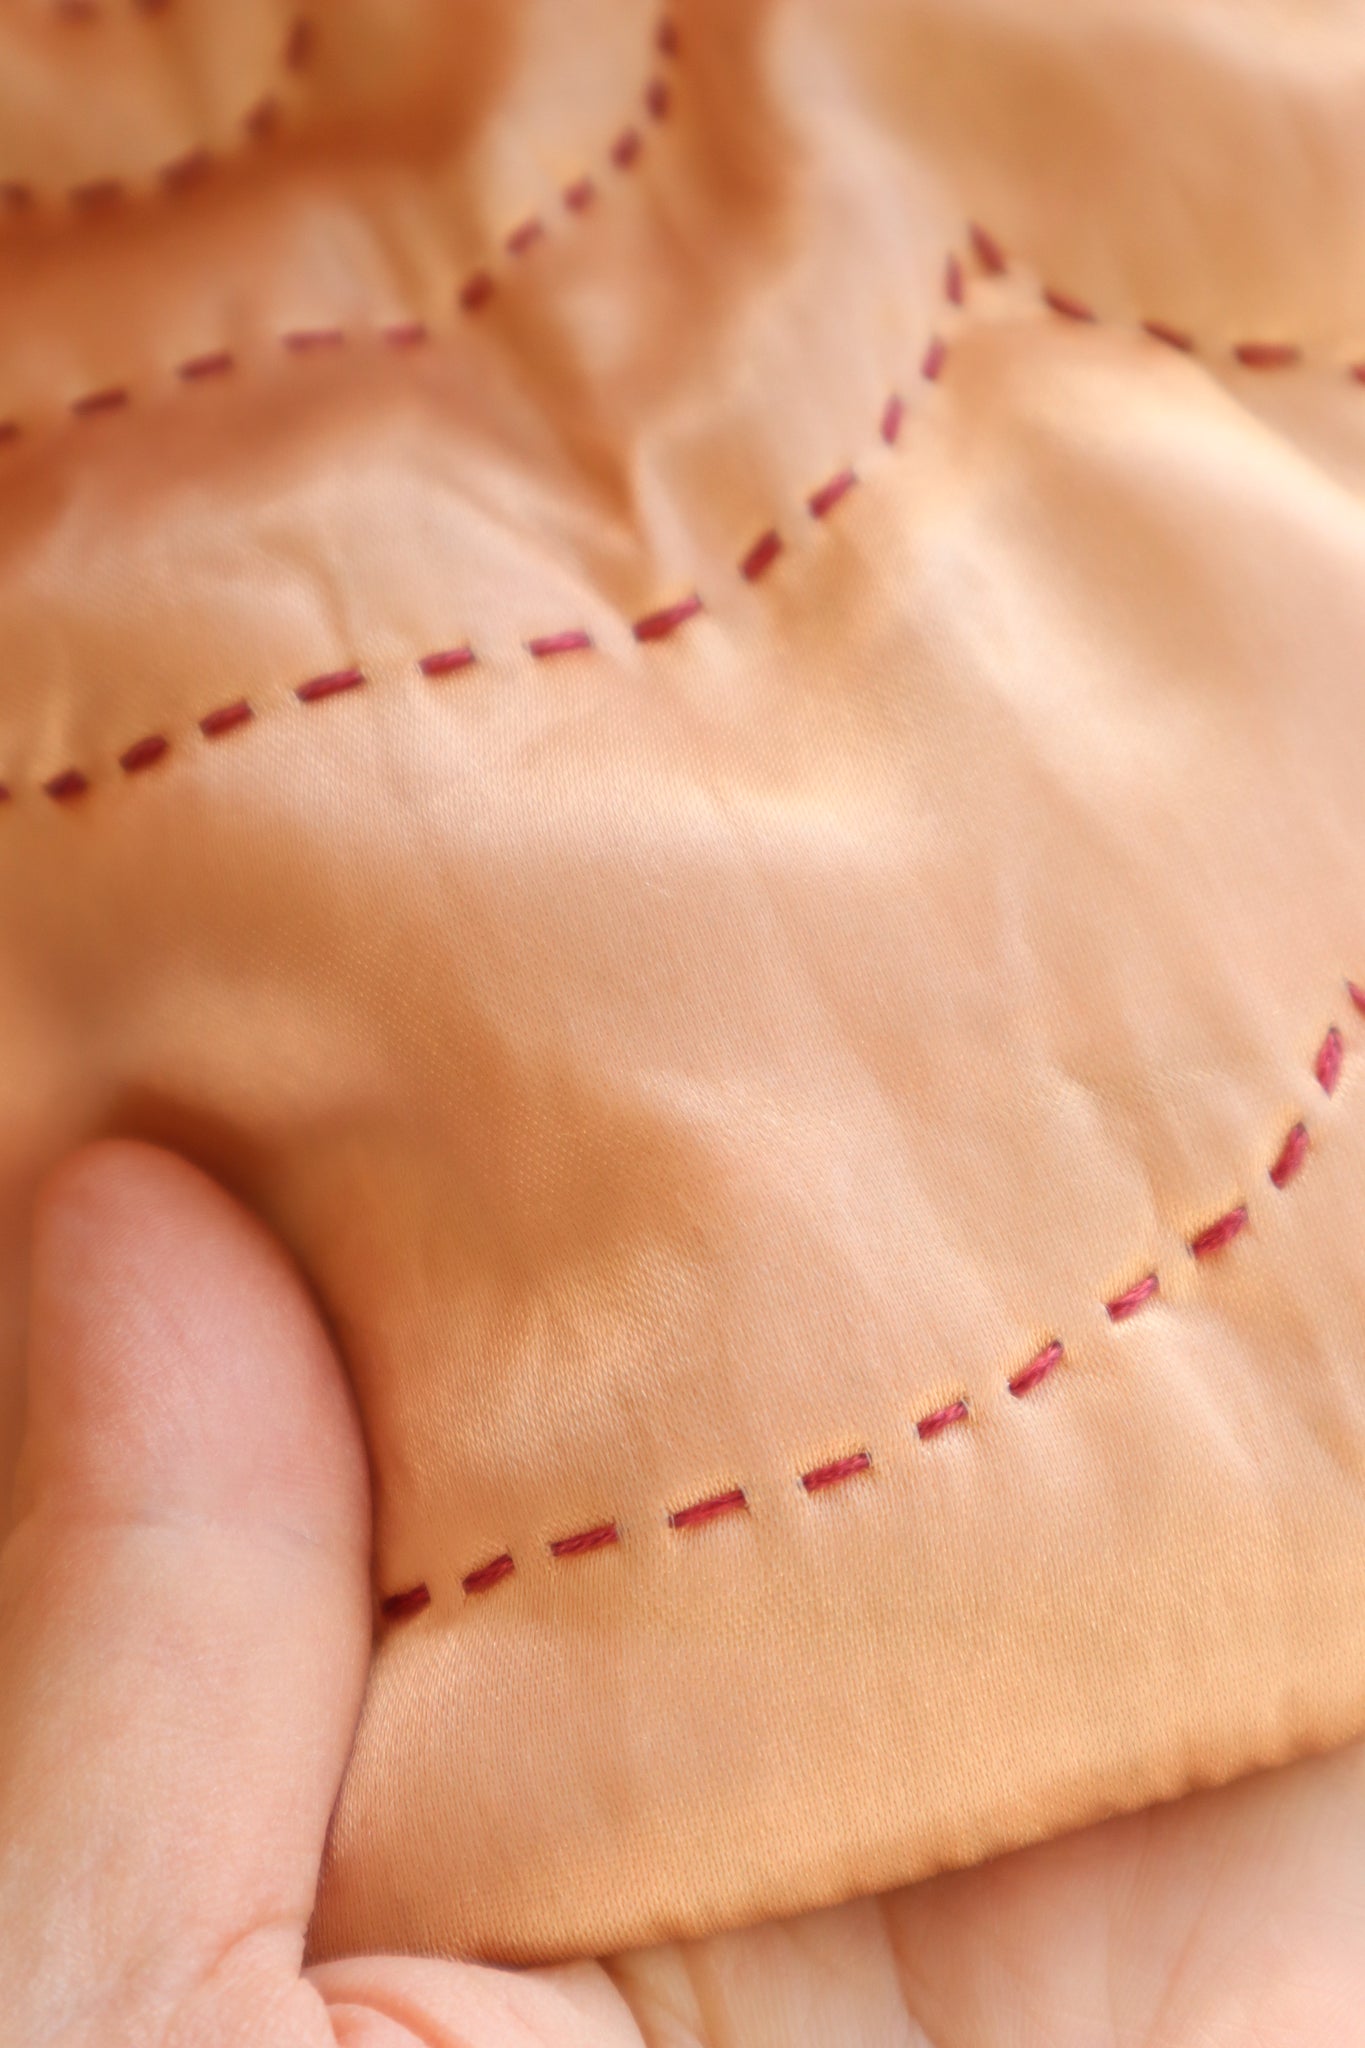 1940s Hand Stitch Quilting Bed Jacket